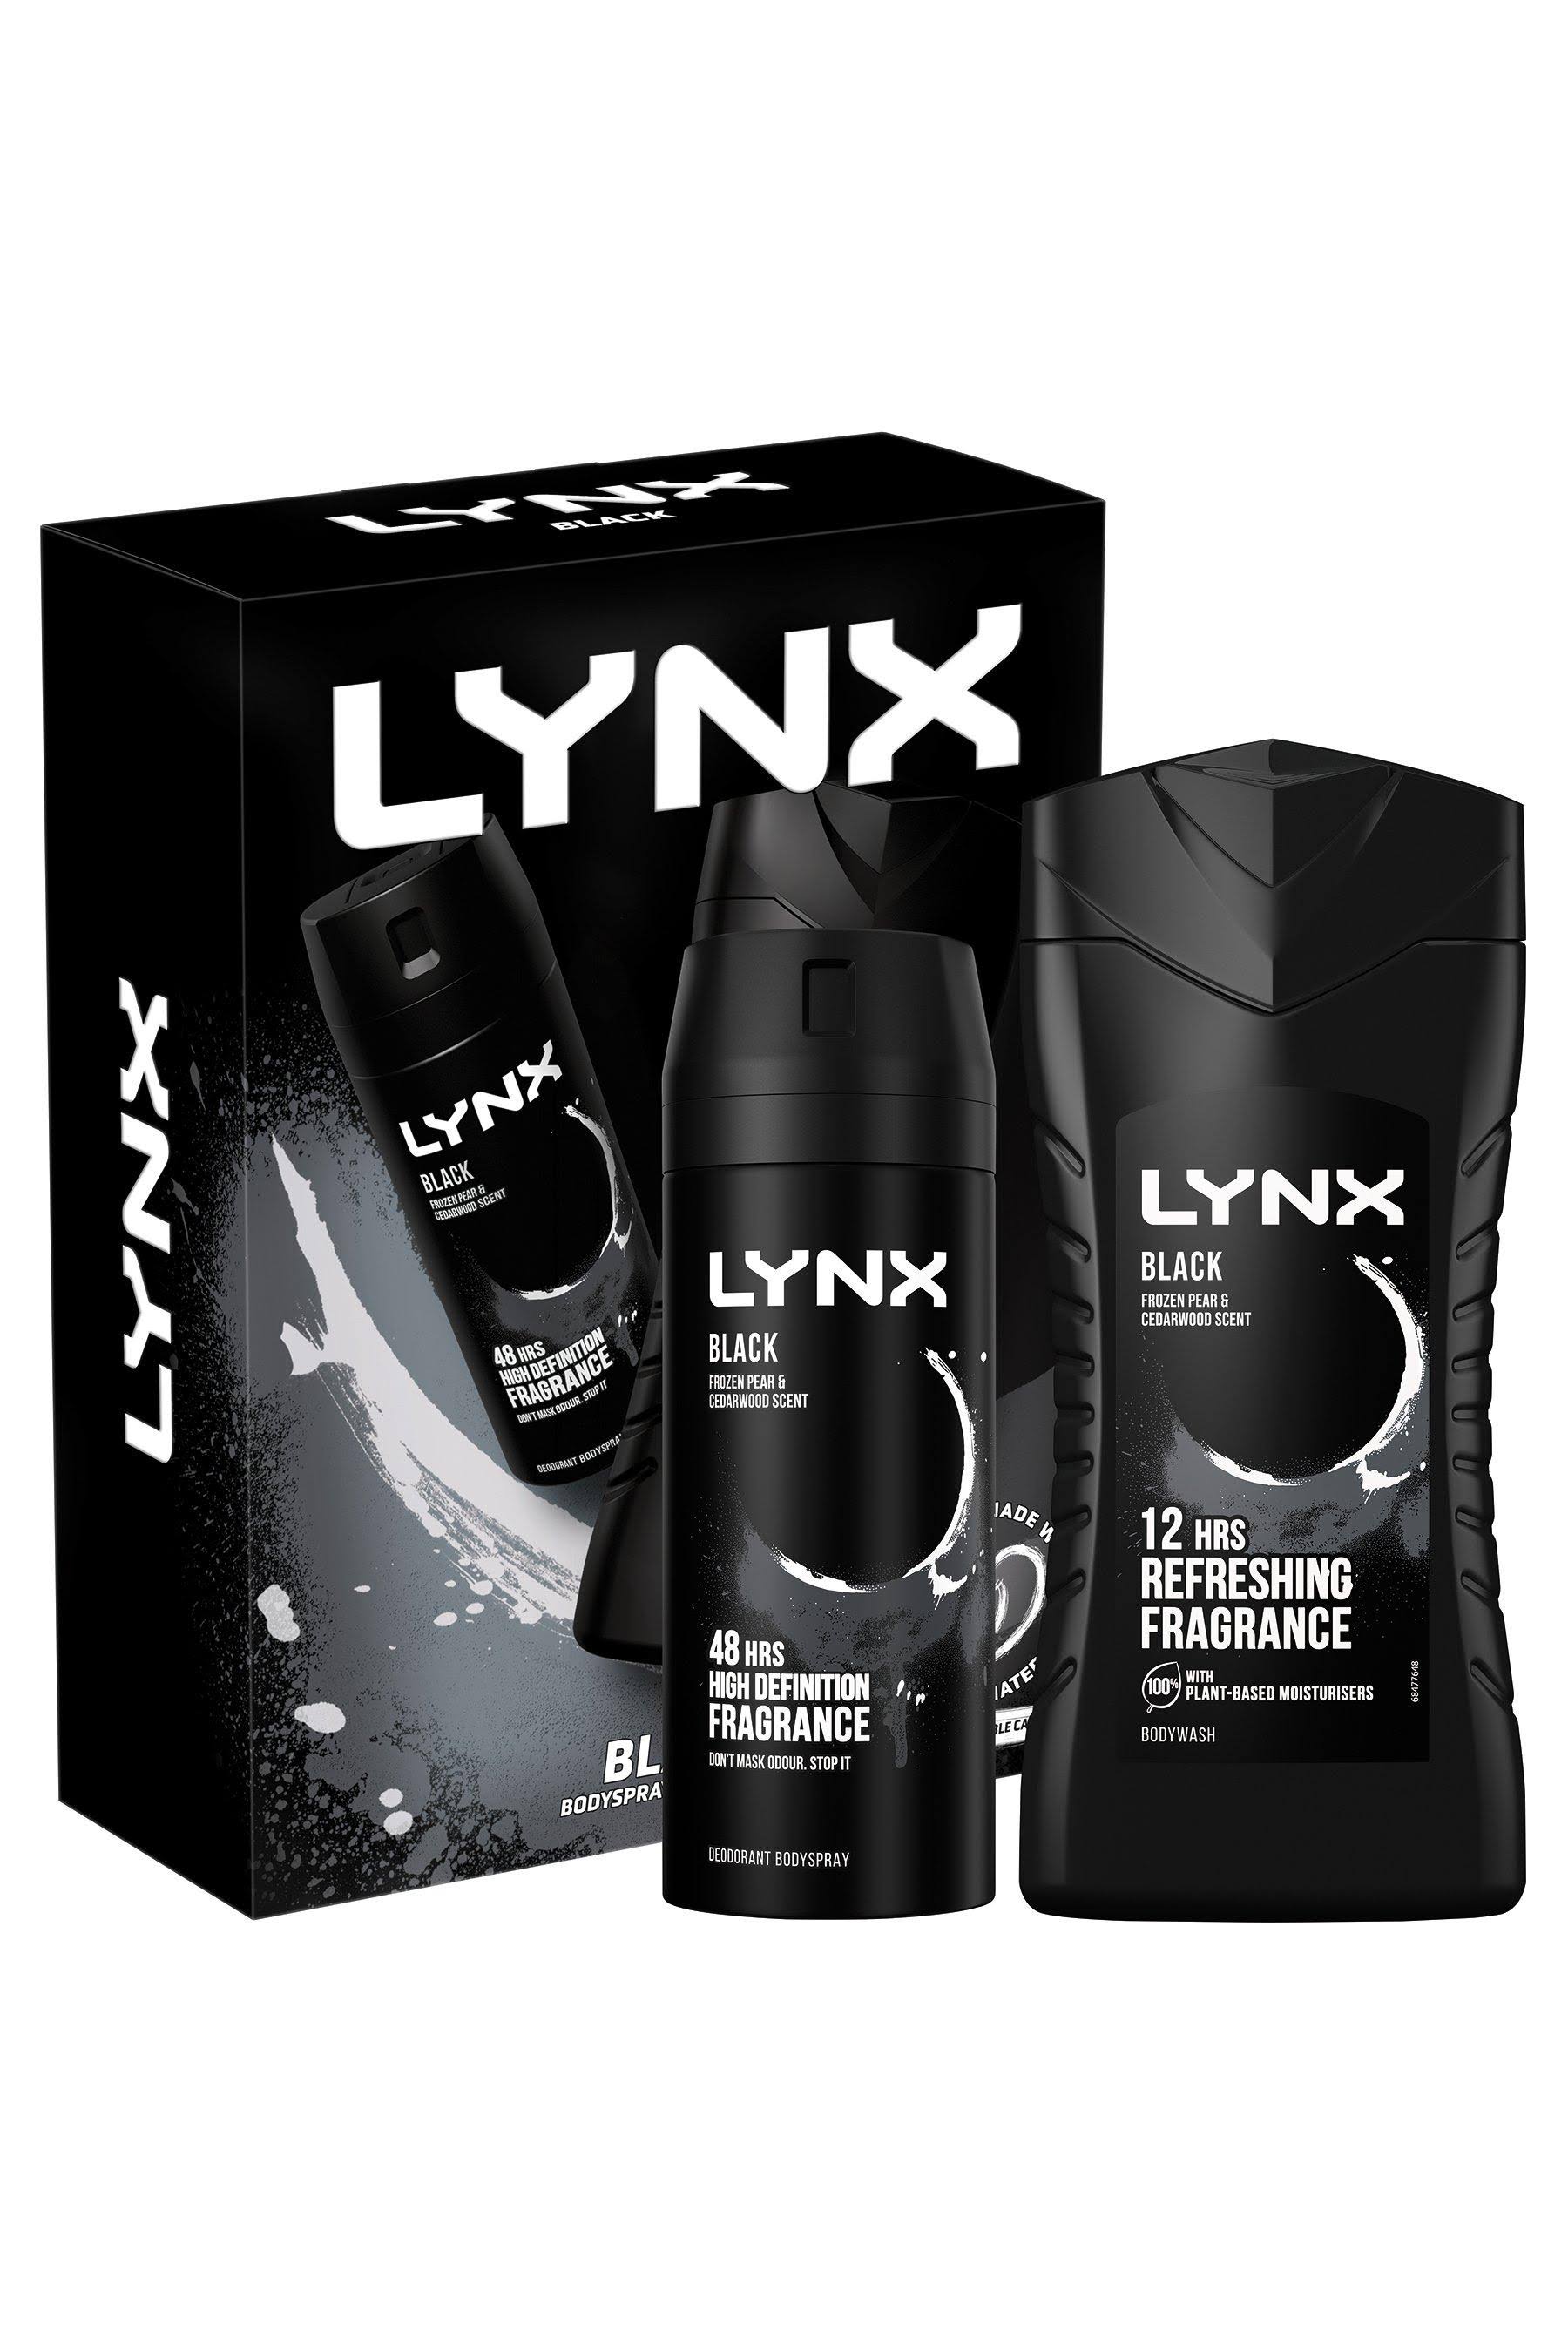 Lynx Black Duo Gift Set by dpharmacy